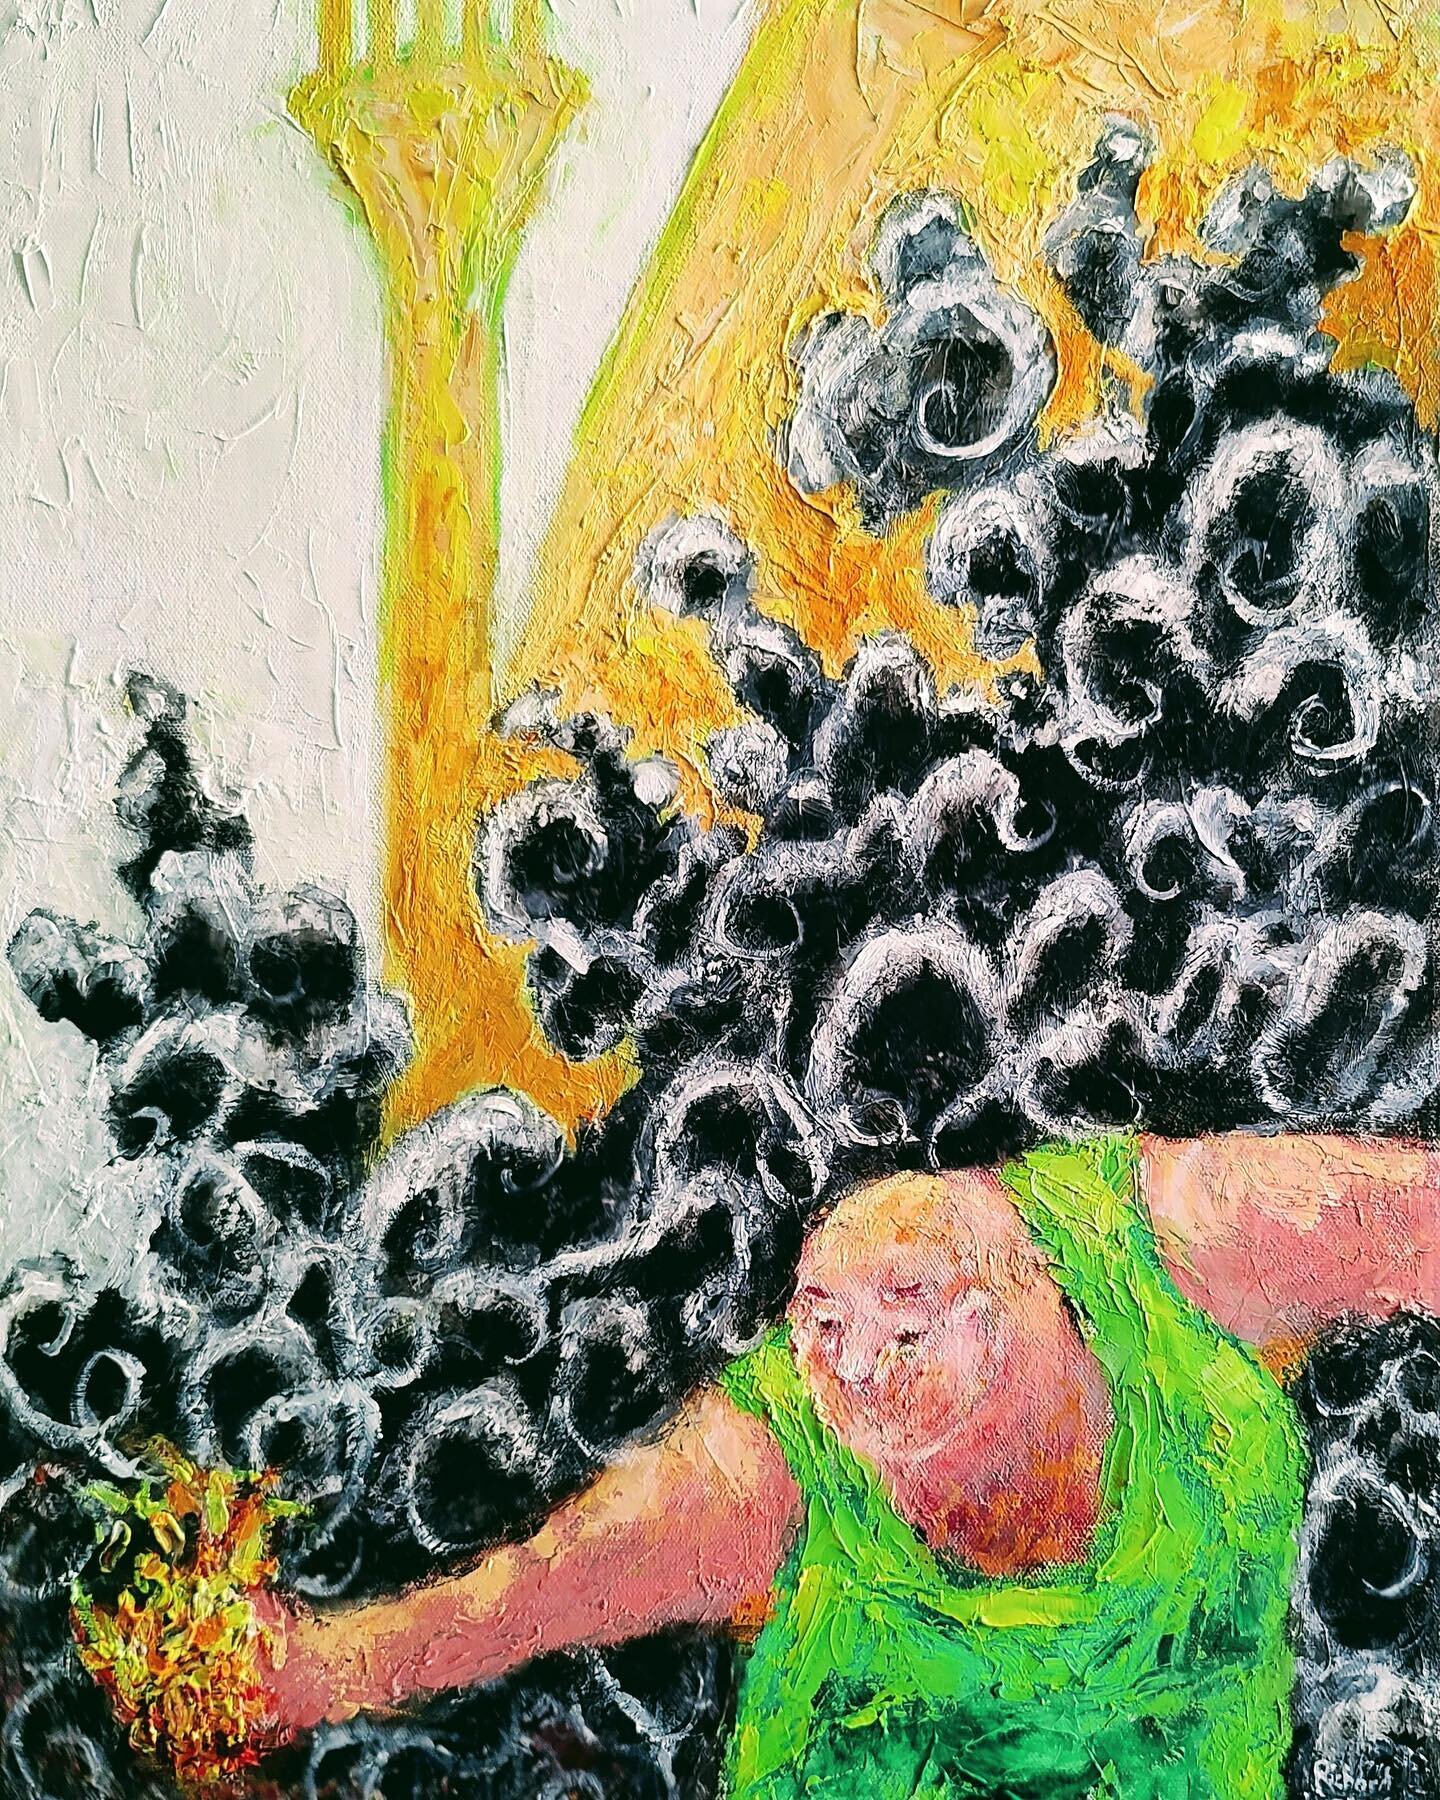 Quasimodo&rsquo;s Revenge Oil on canvas 18&rdquo; x 24&rdquo; #oilpainting #artist #artistsoninstagram #quasimodo #hunchback #victorhugo #fantasy #satire #dream #modernart #legend